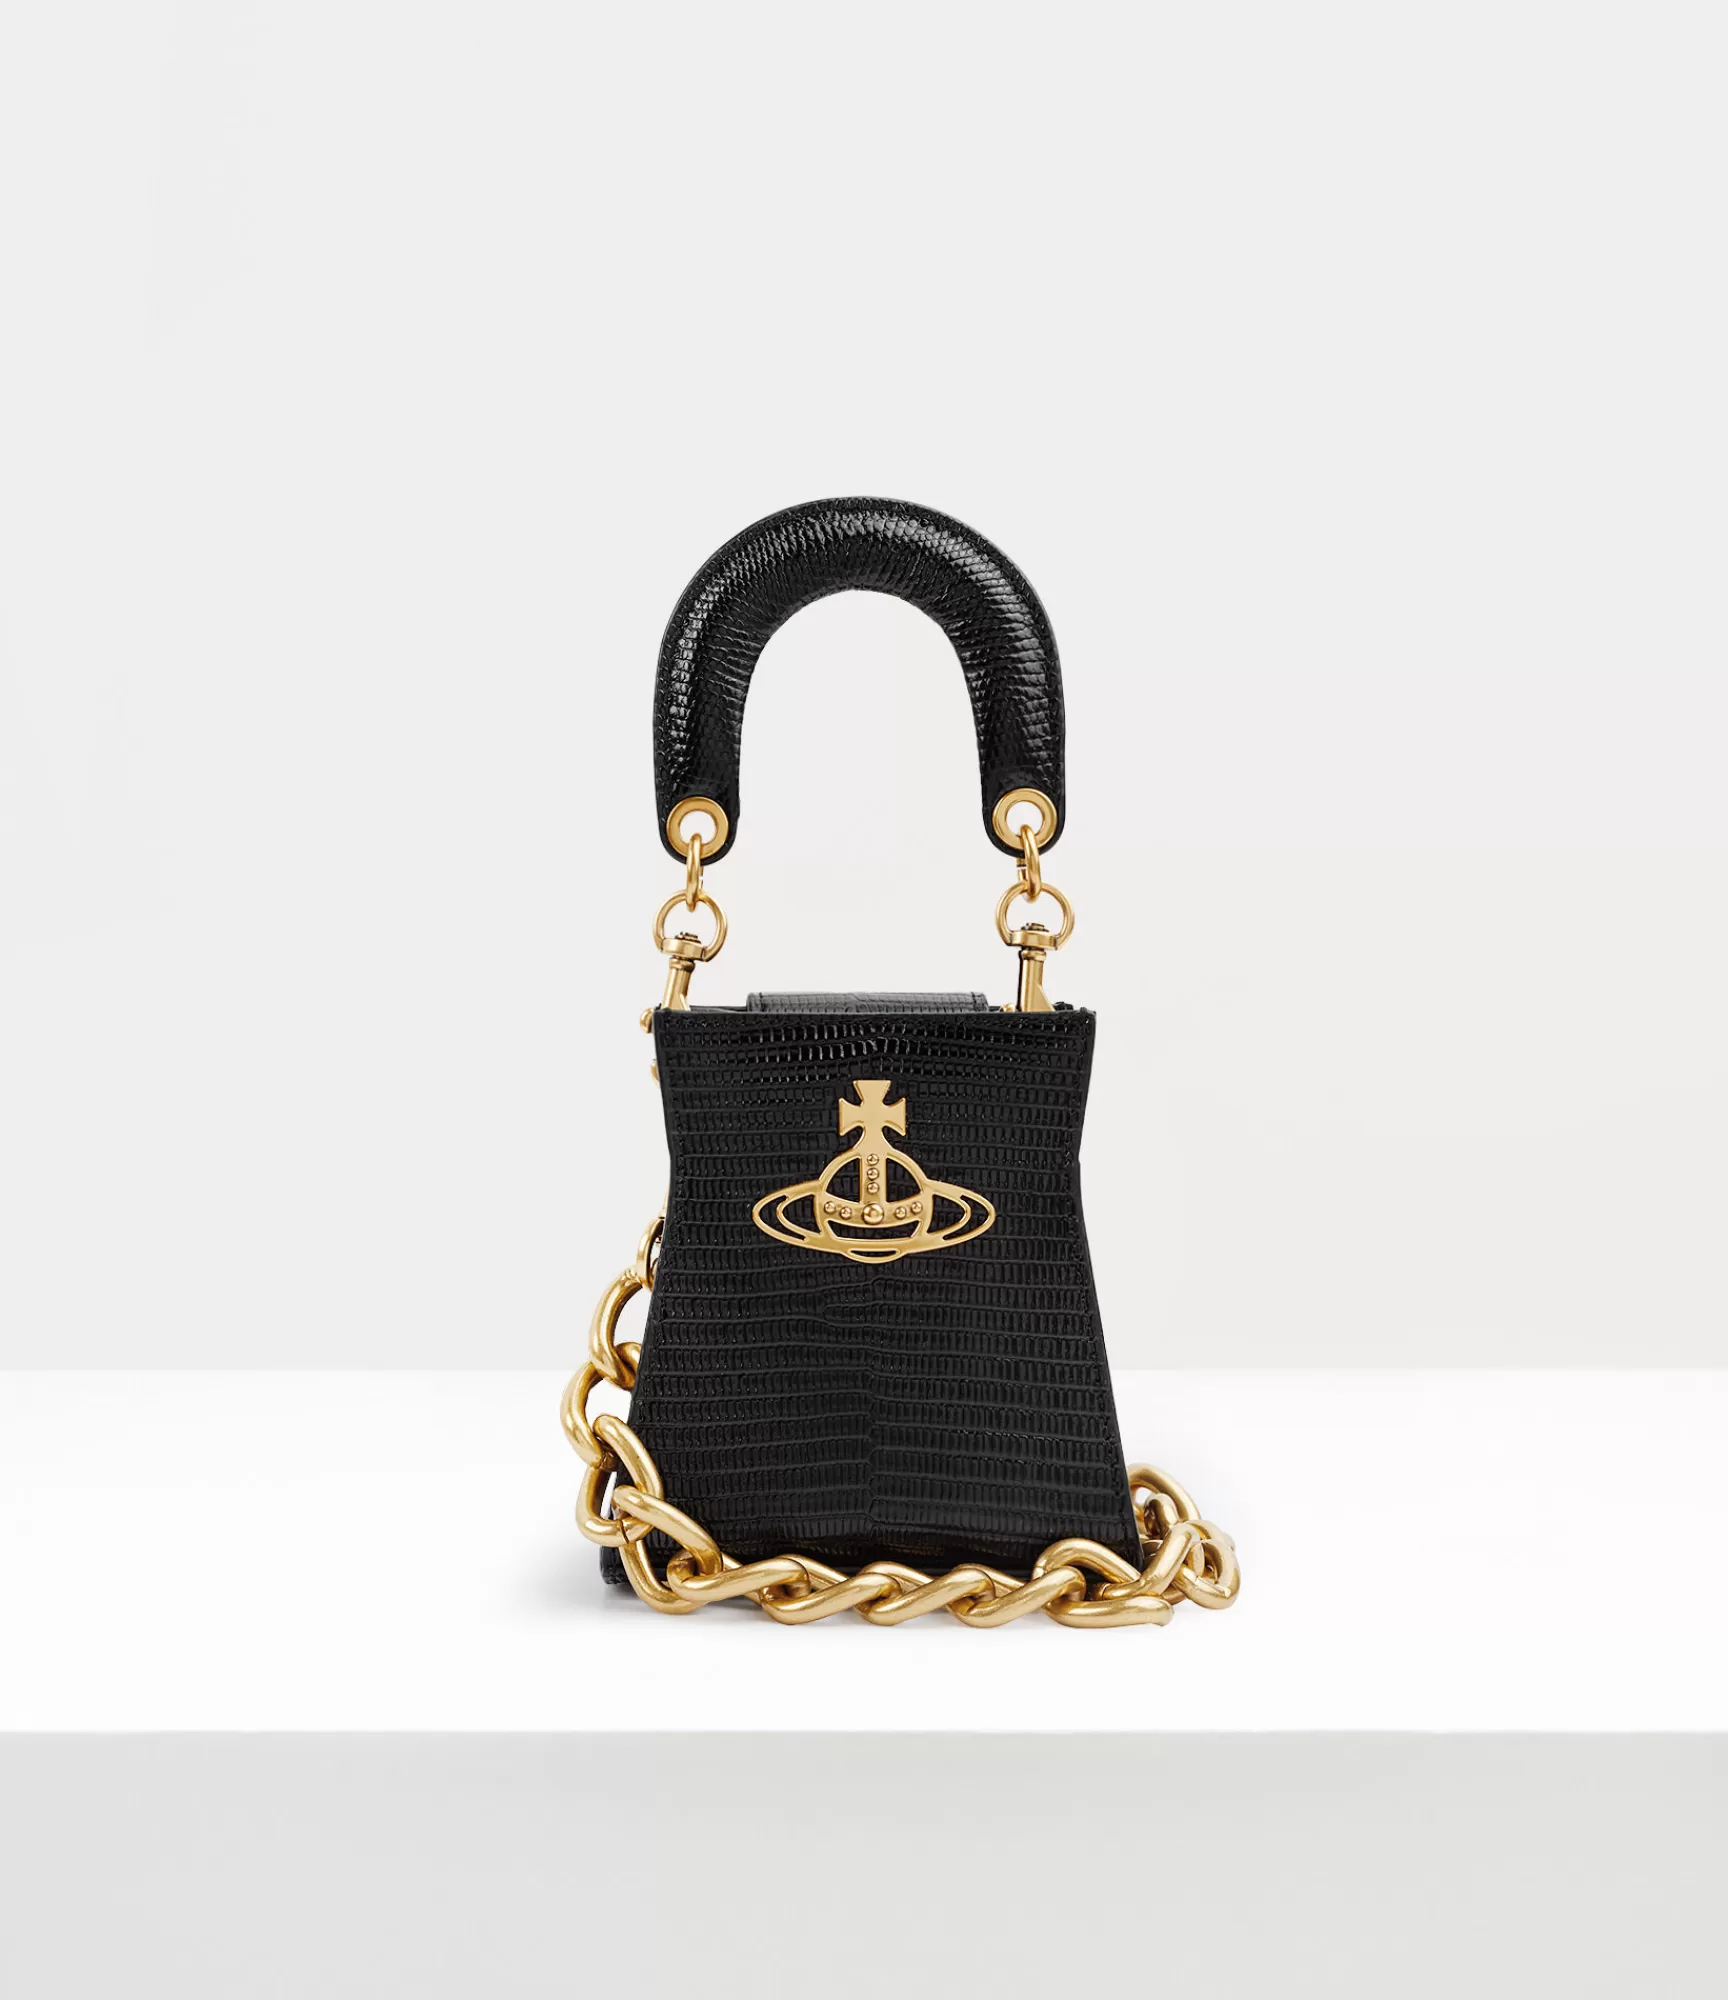 Vivienne Westwood Handbags*Kelly small handbag Black